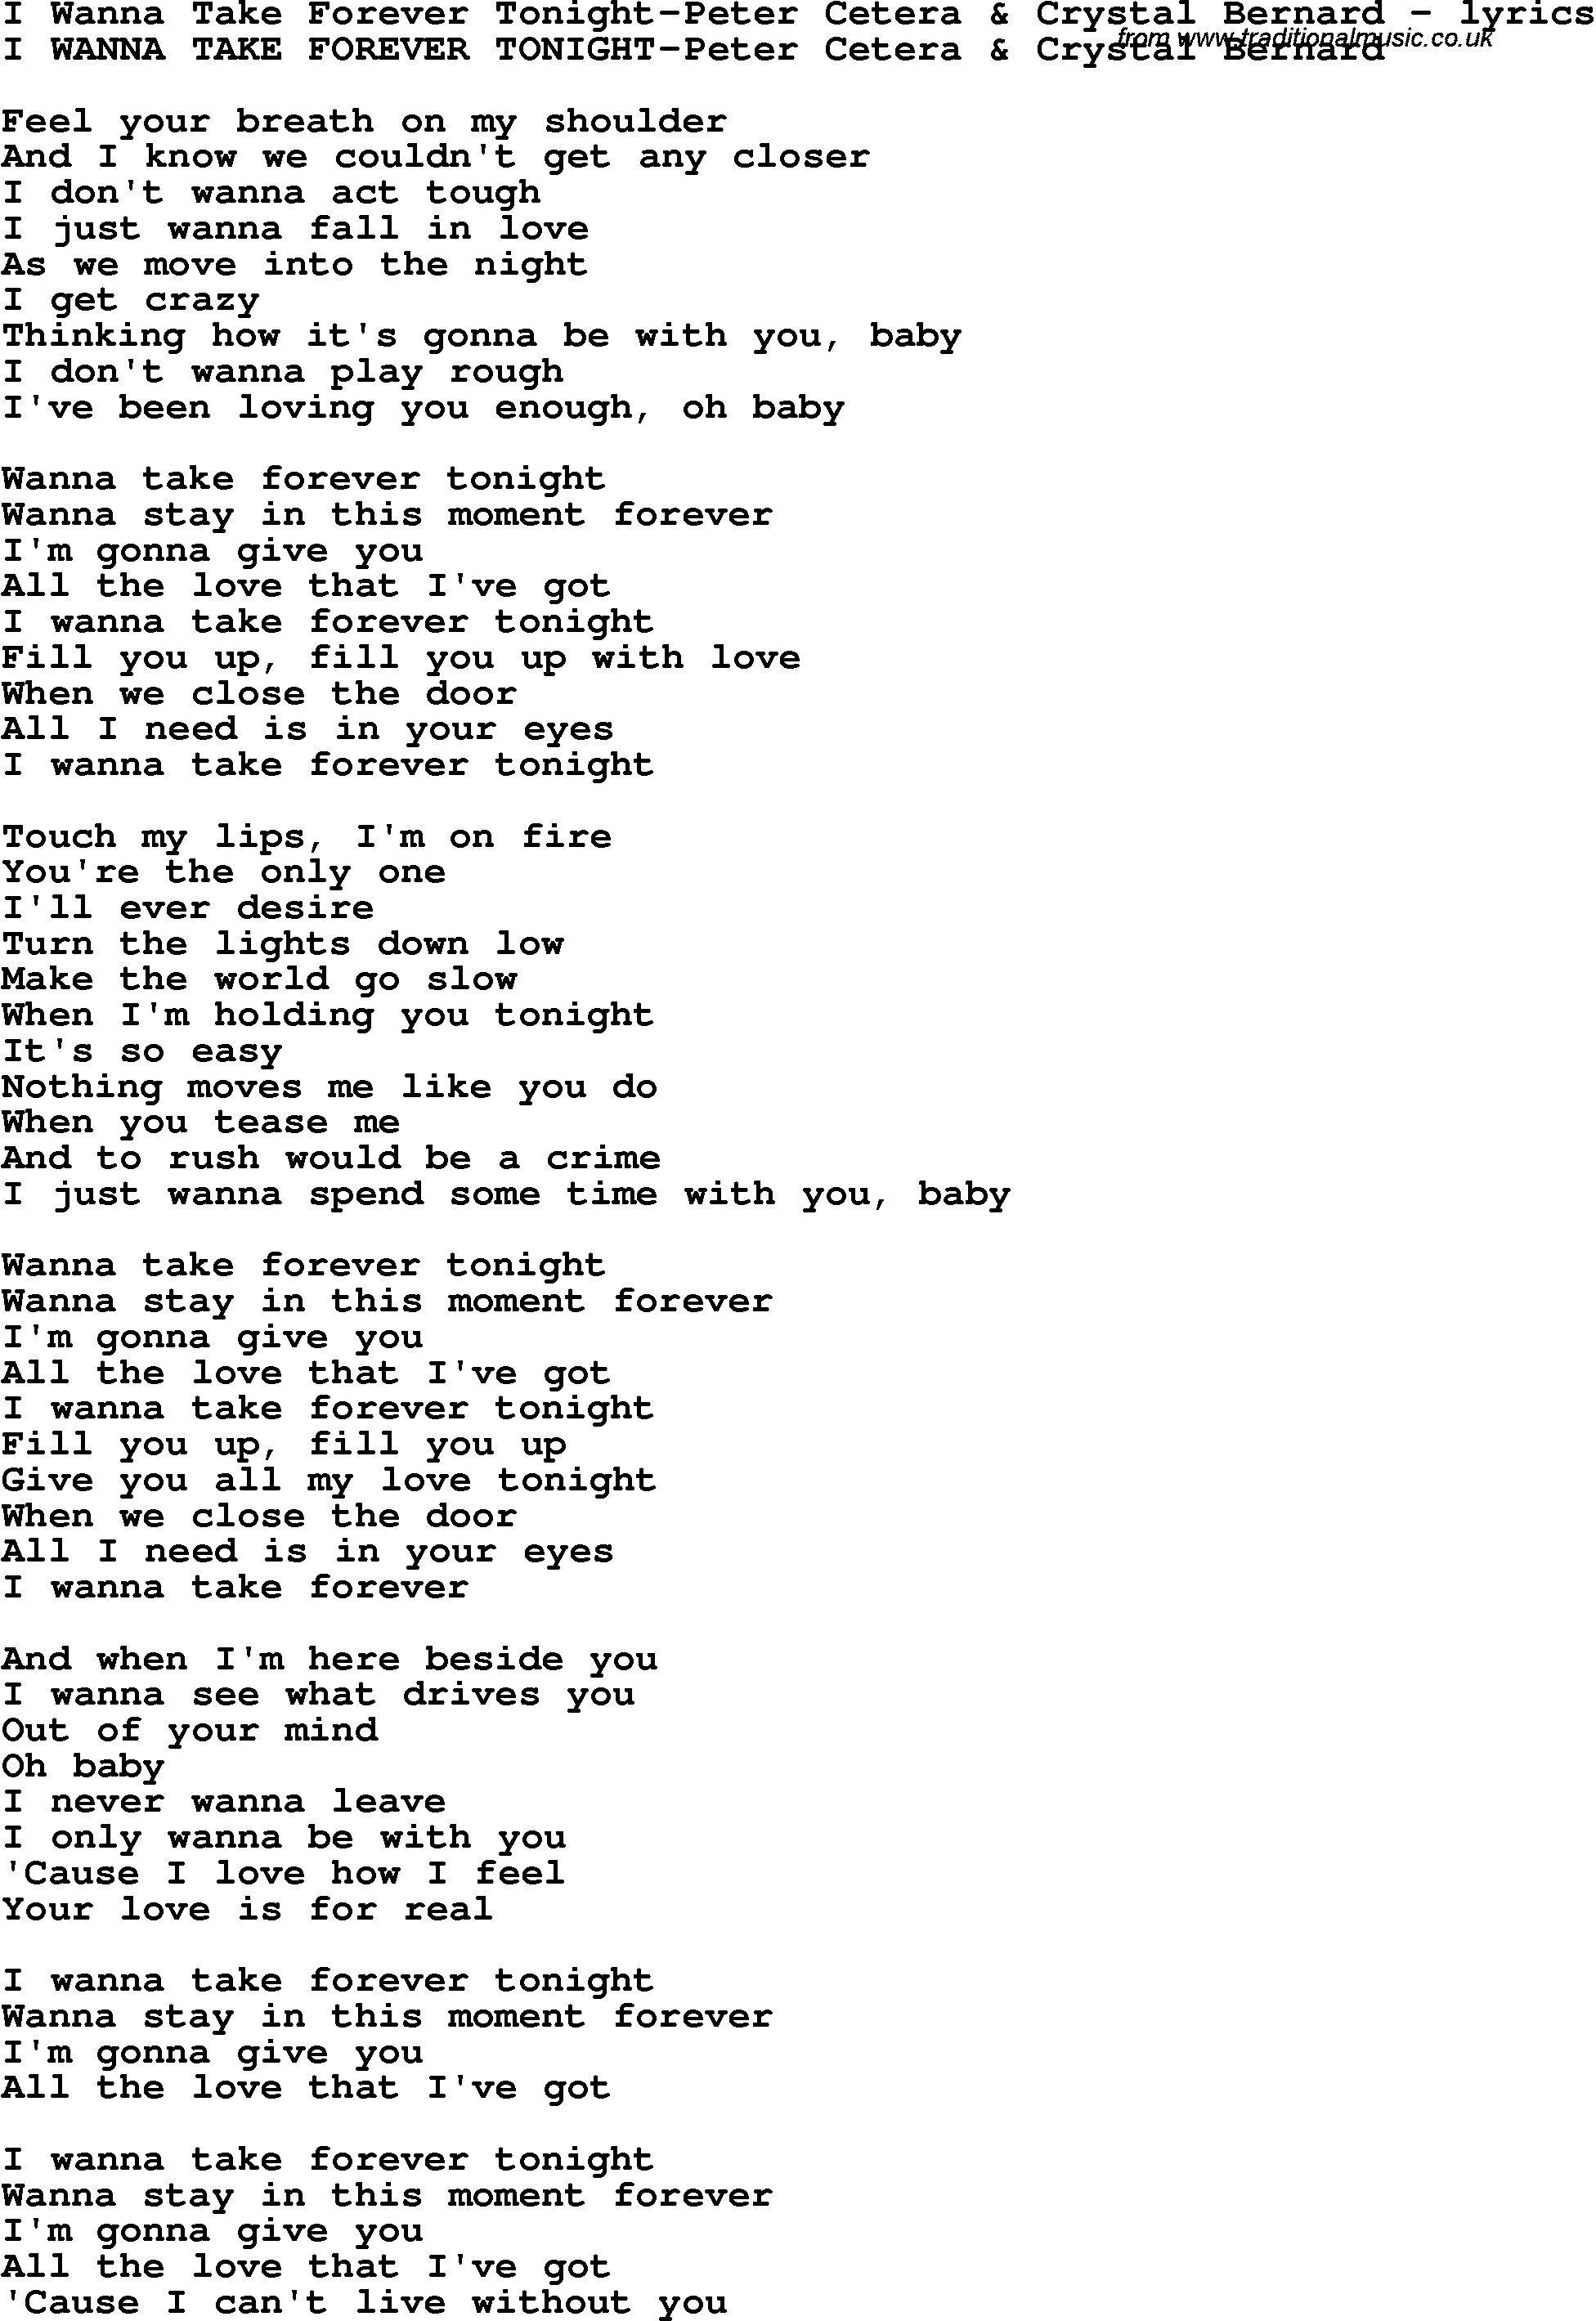 Love Song Lyrics for: I Wanna Take Forever Tonight-Peter Cetera & Crystal Bernard